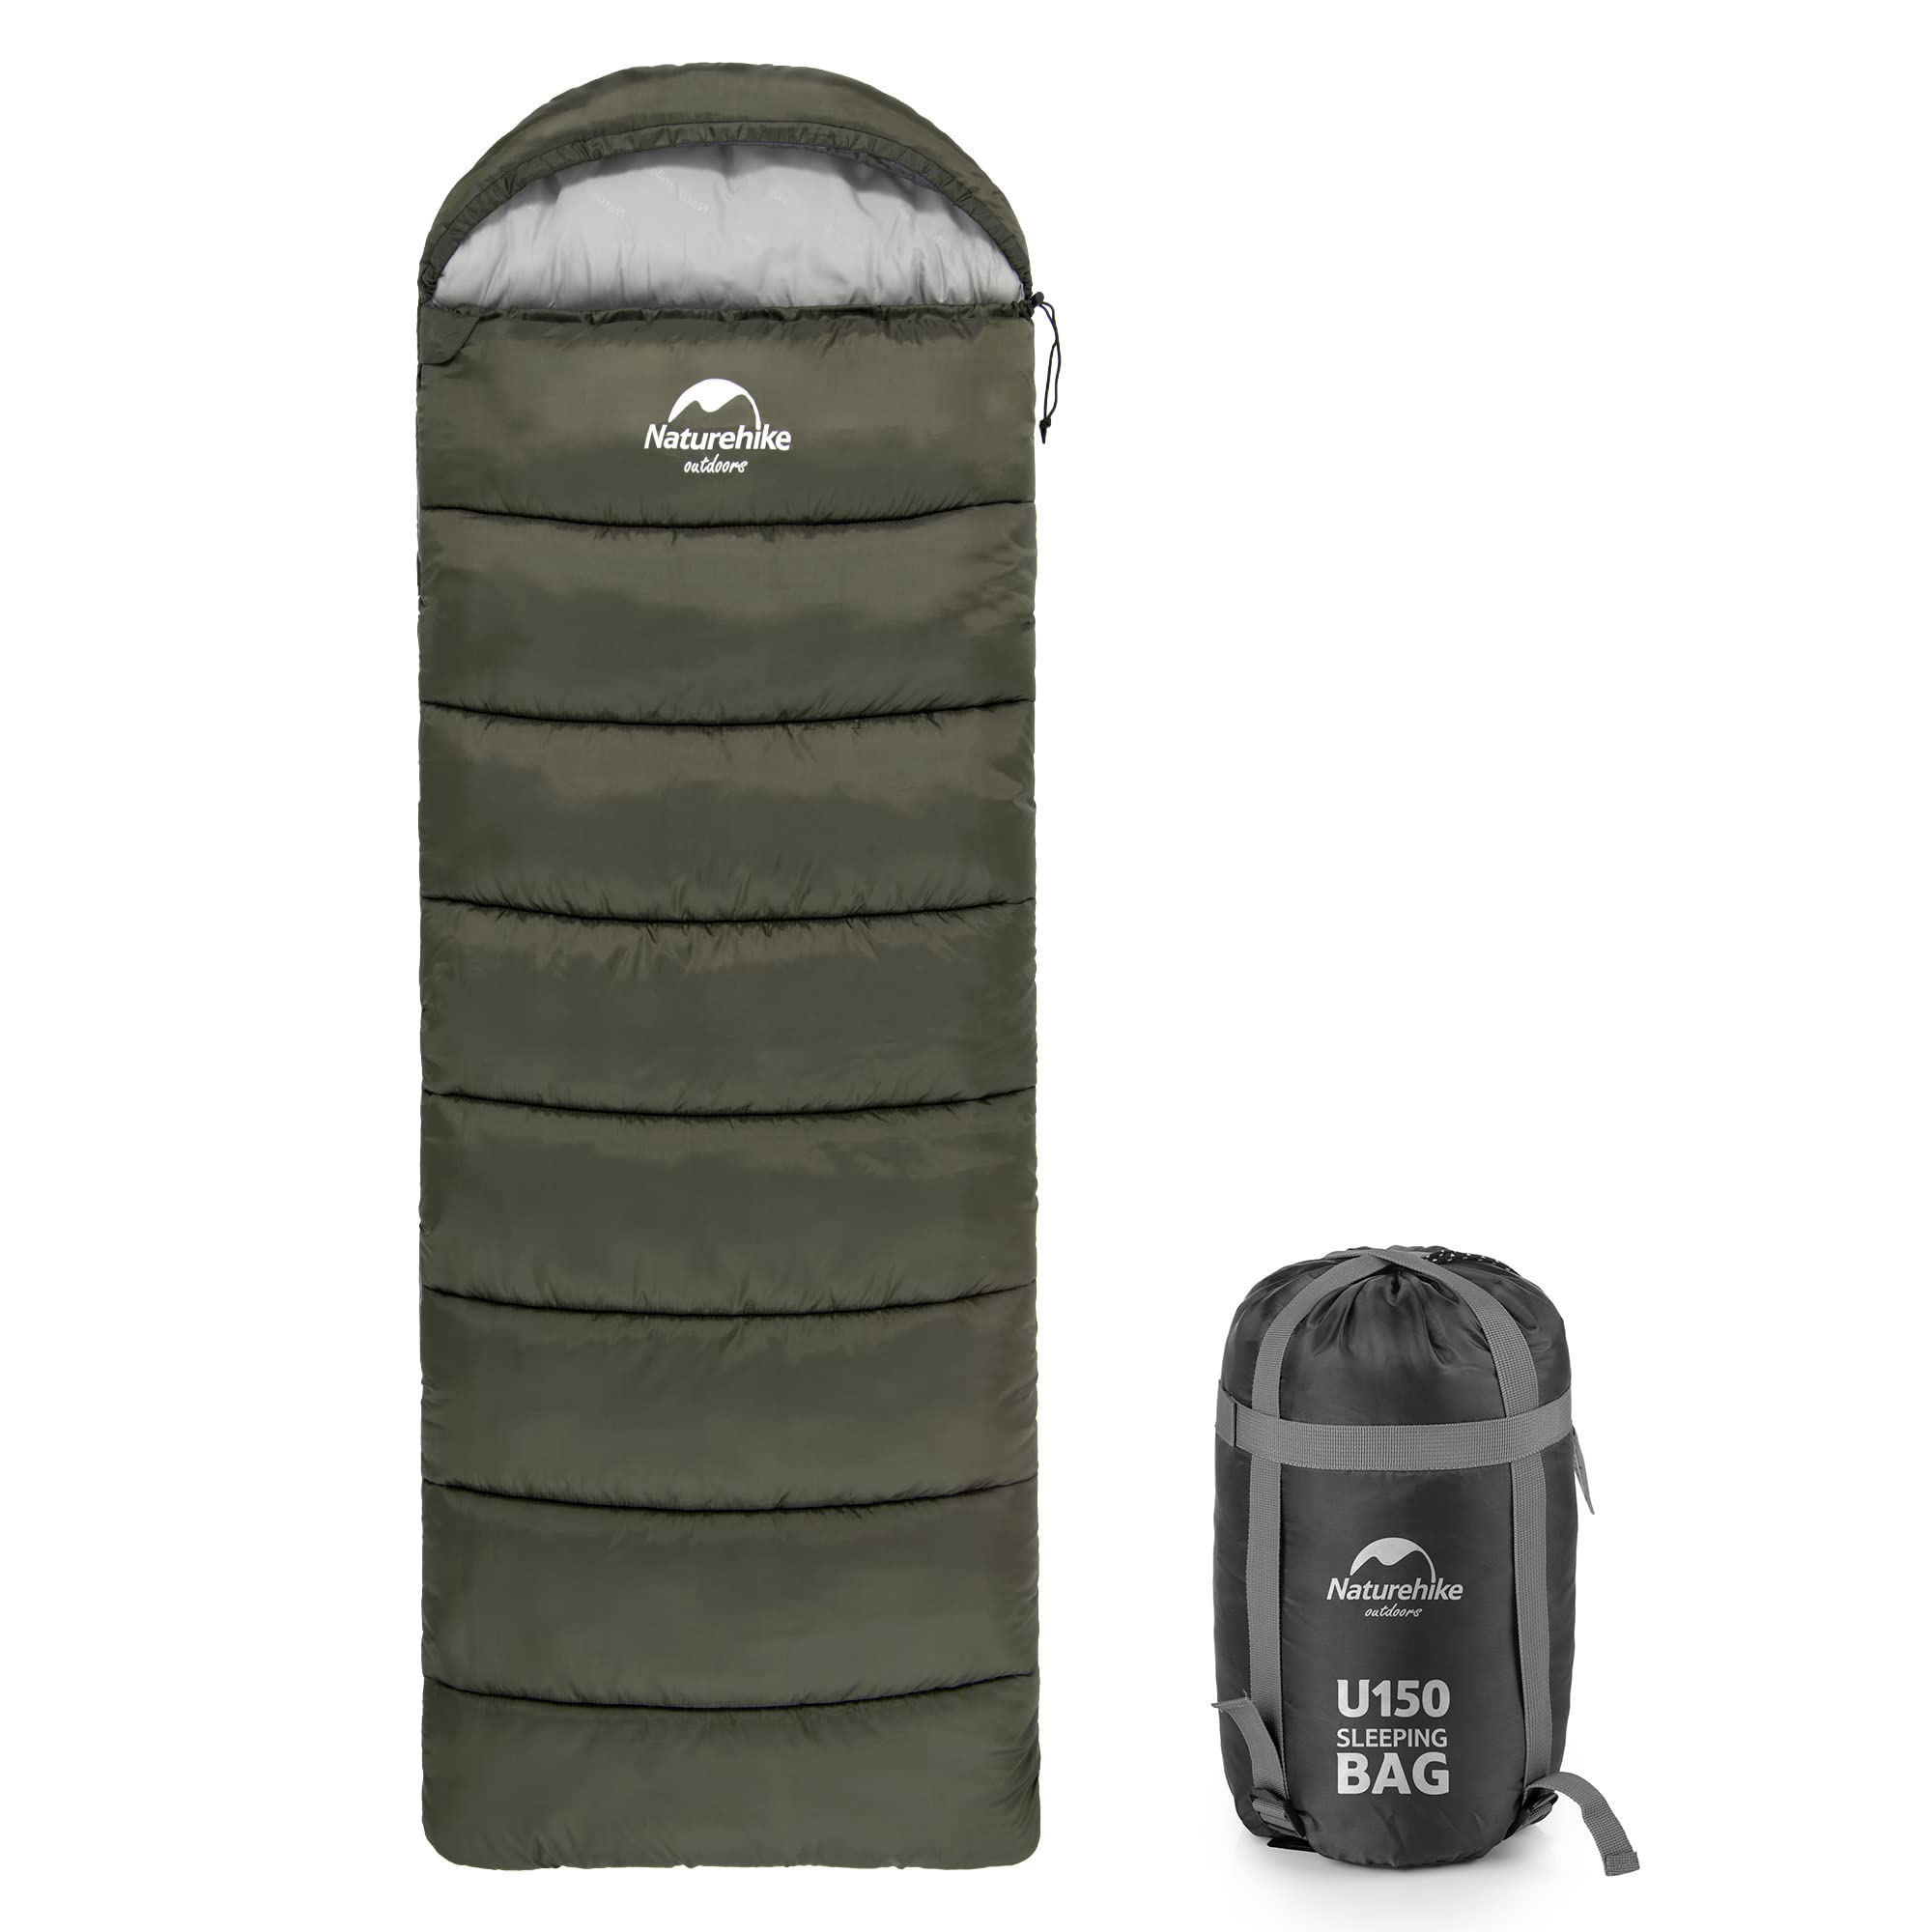 Naturehike Unisex-Adult 6927595764398 Sleeping Bag, ArmyGreen, Standard